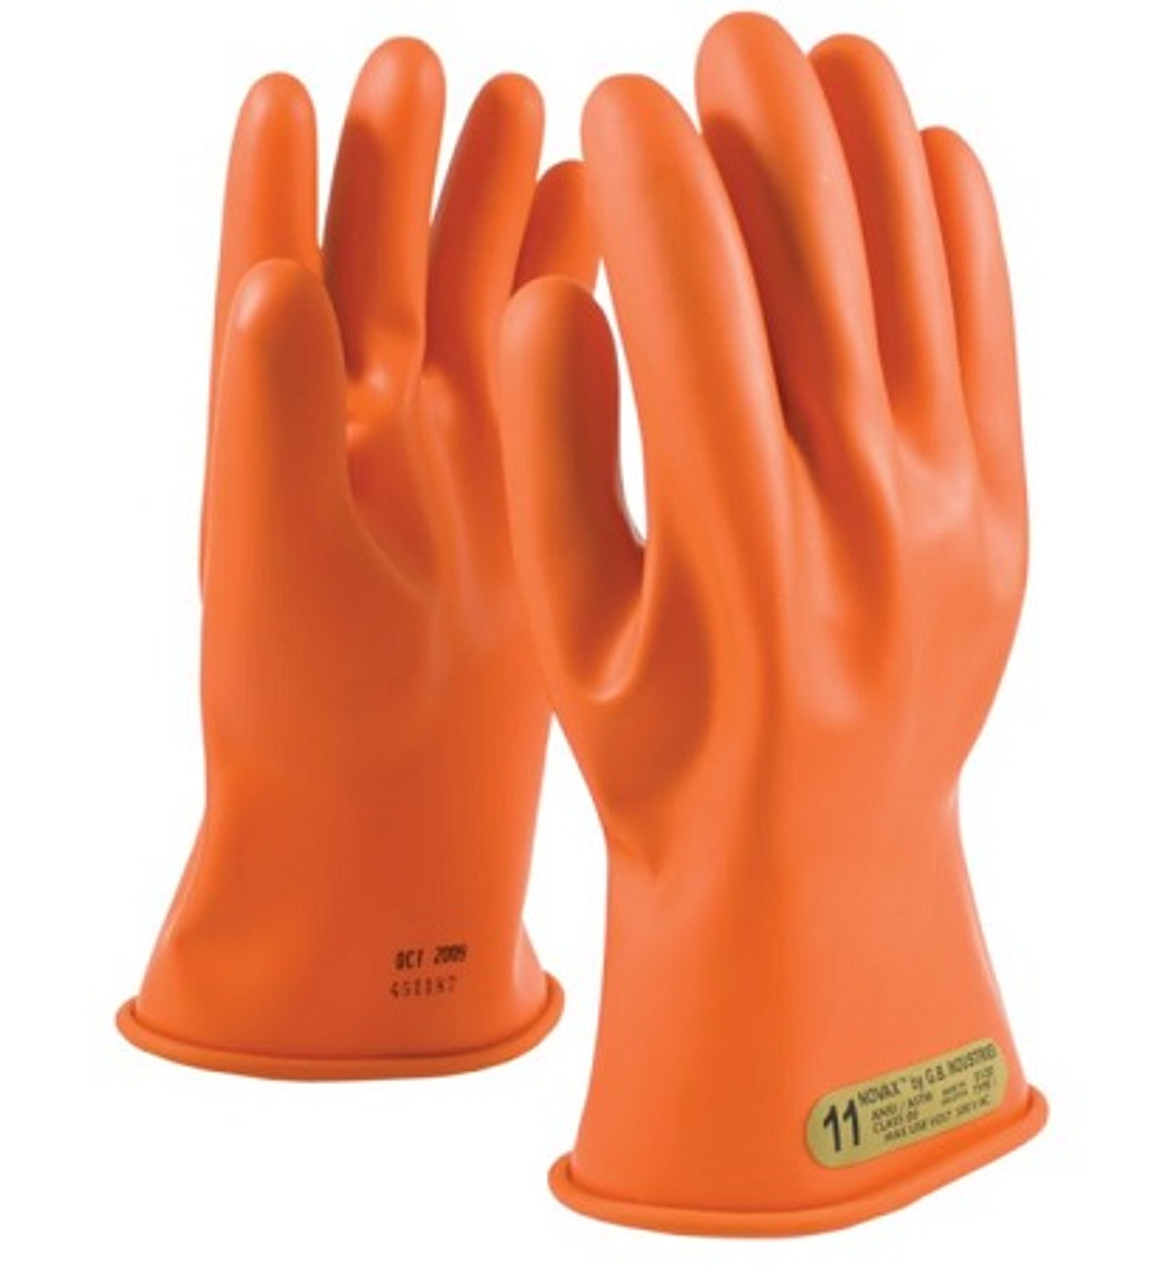 Gloves - Privae